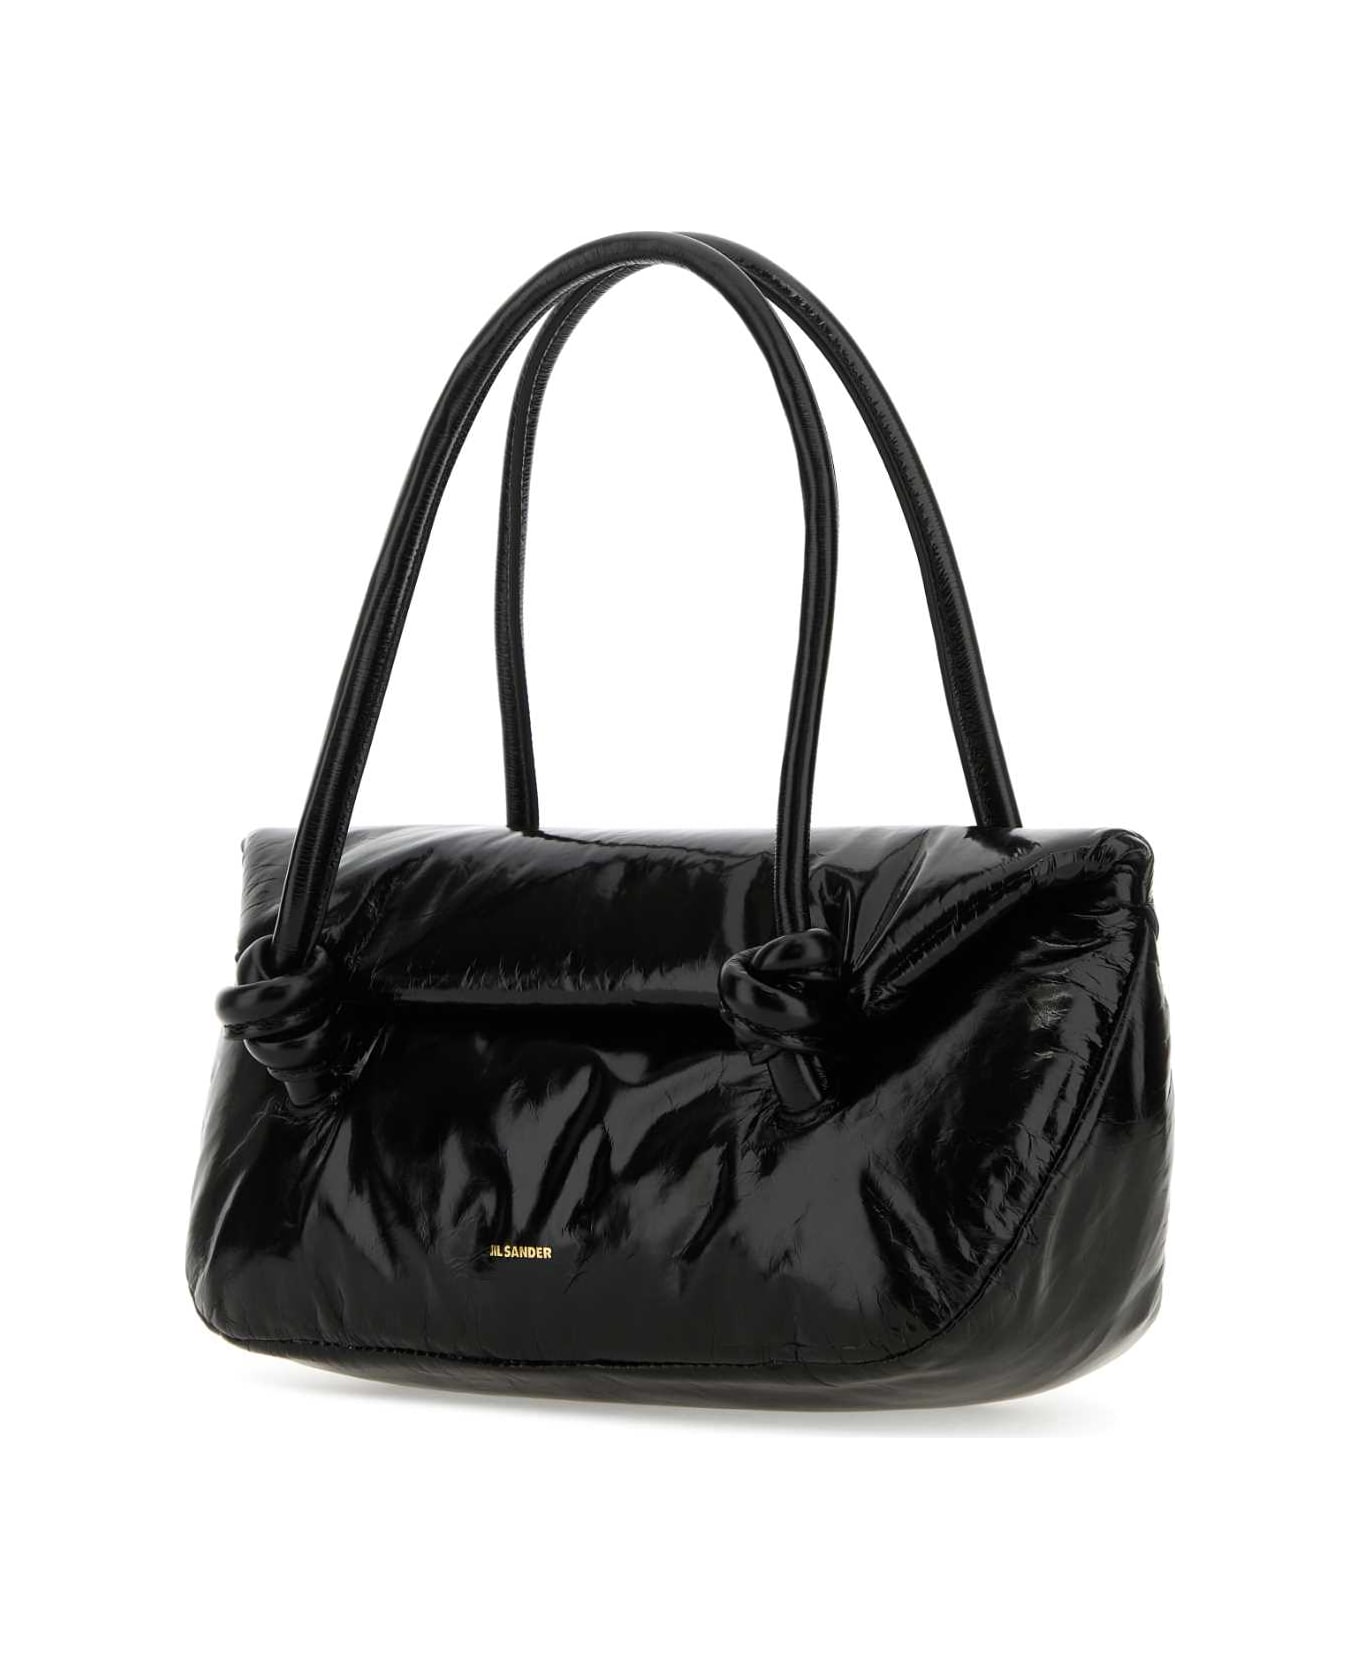 Jil Sander Black Leather Small Knot Handle Handbag - 001